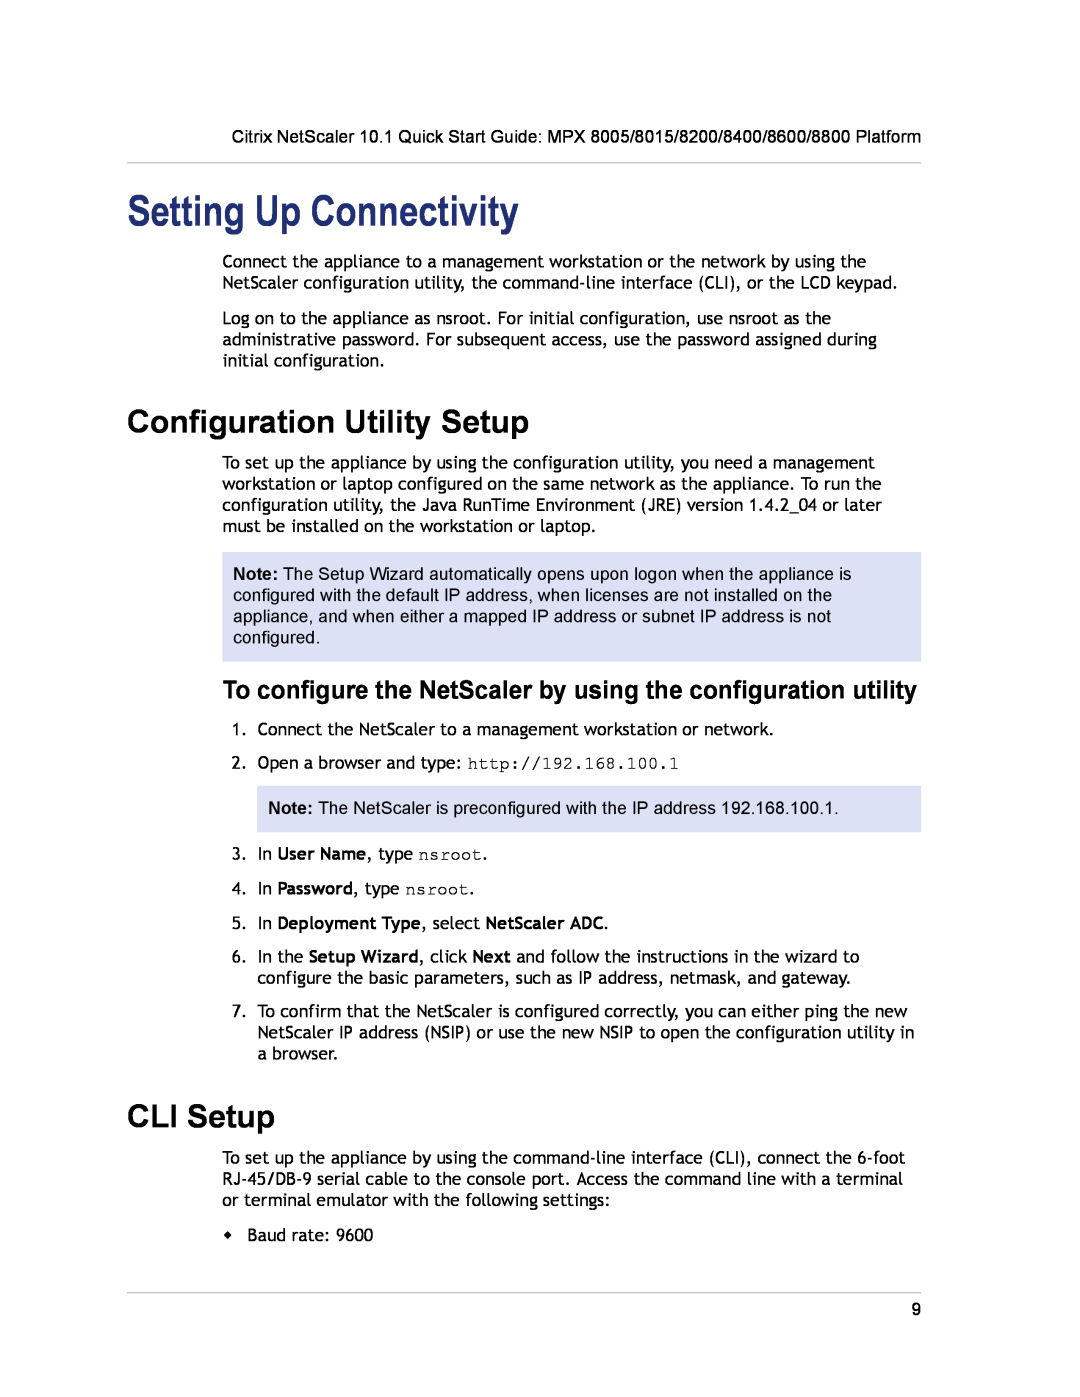 Citrix Systems 8005, 8800, 8600, 8200, 8400, 8015 quick start Setting Up Connectivity, Configuration Utility Setup, CLI Setup 